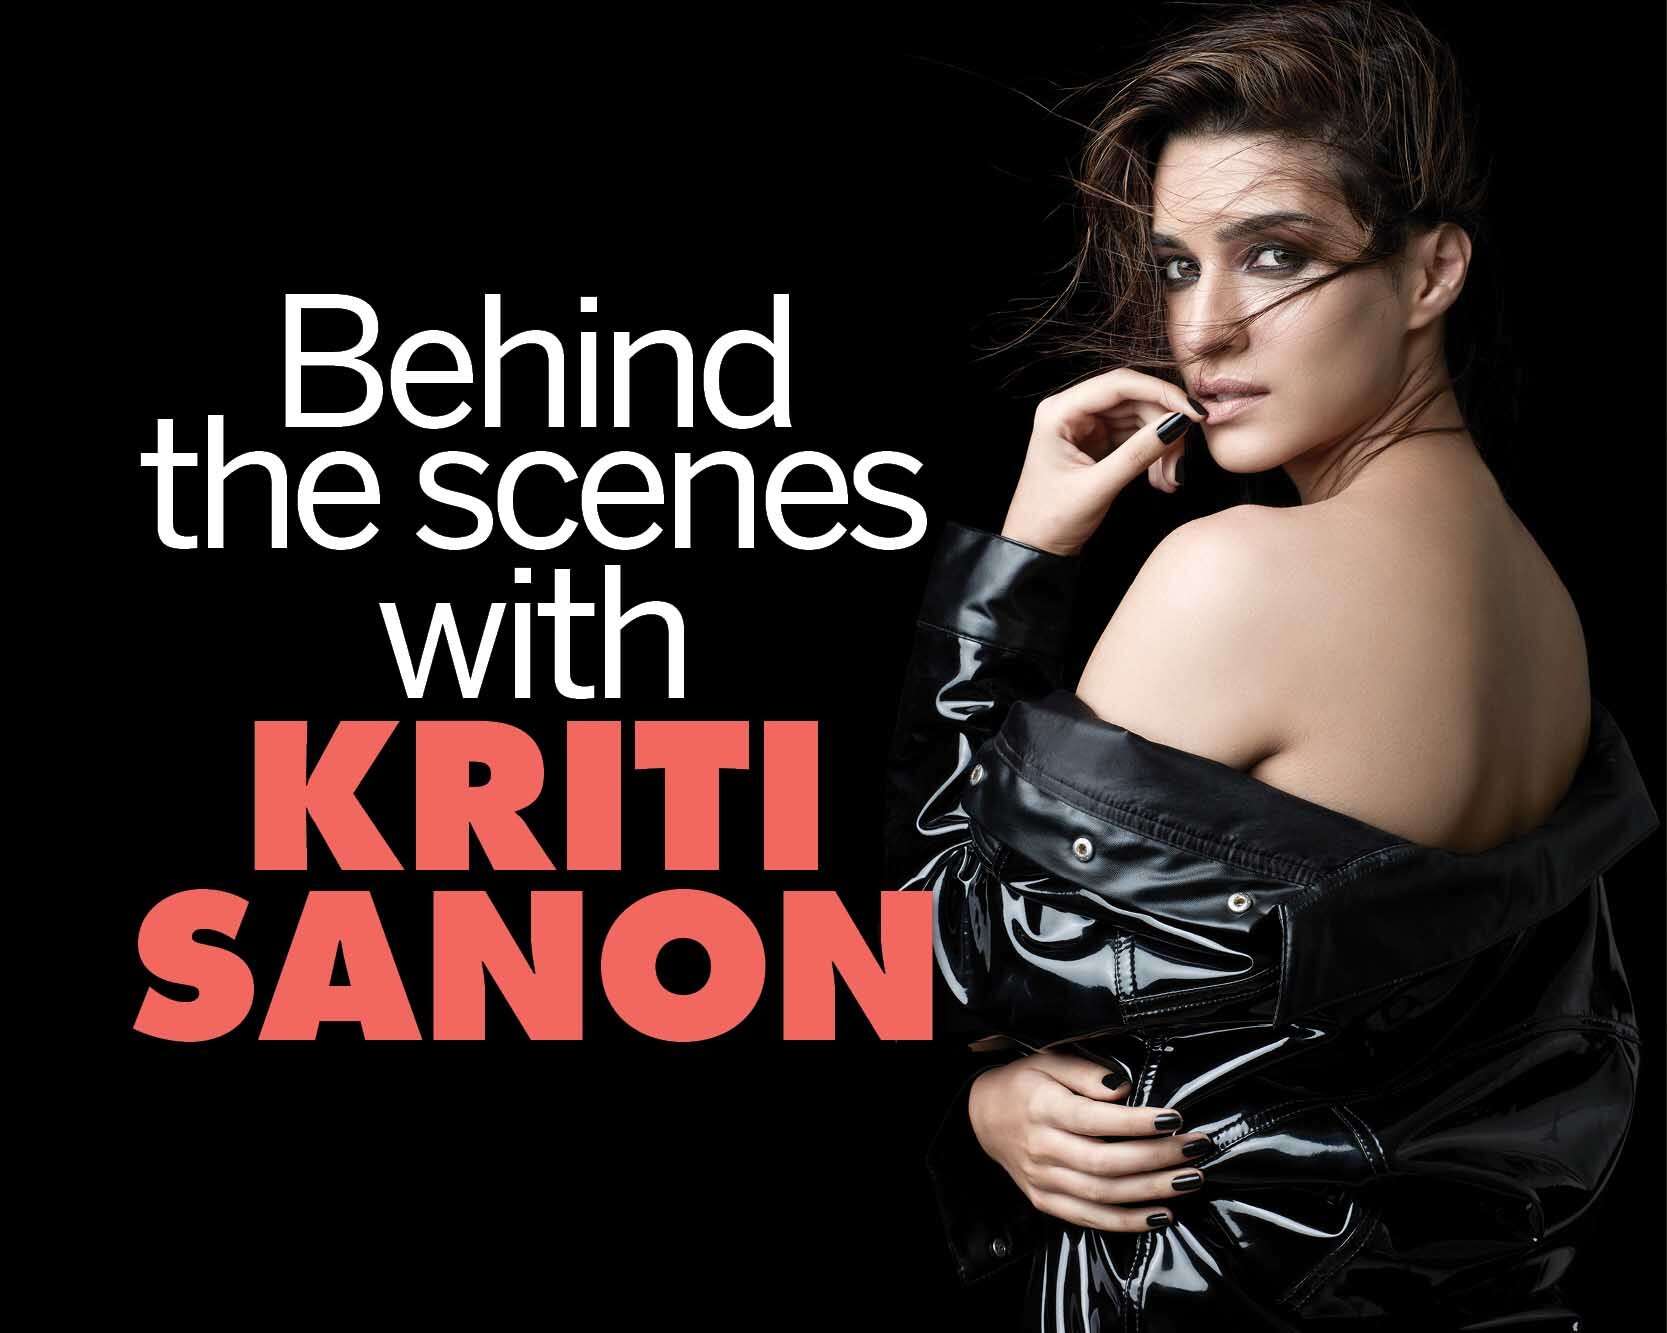 Behind the scenes with Kriti Sanon